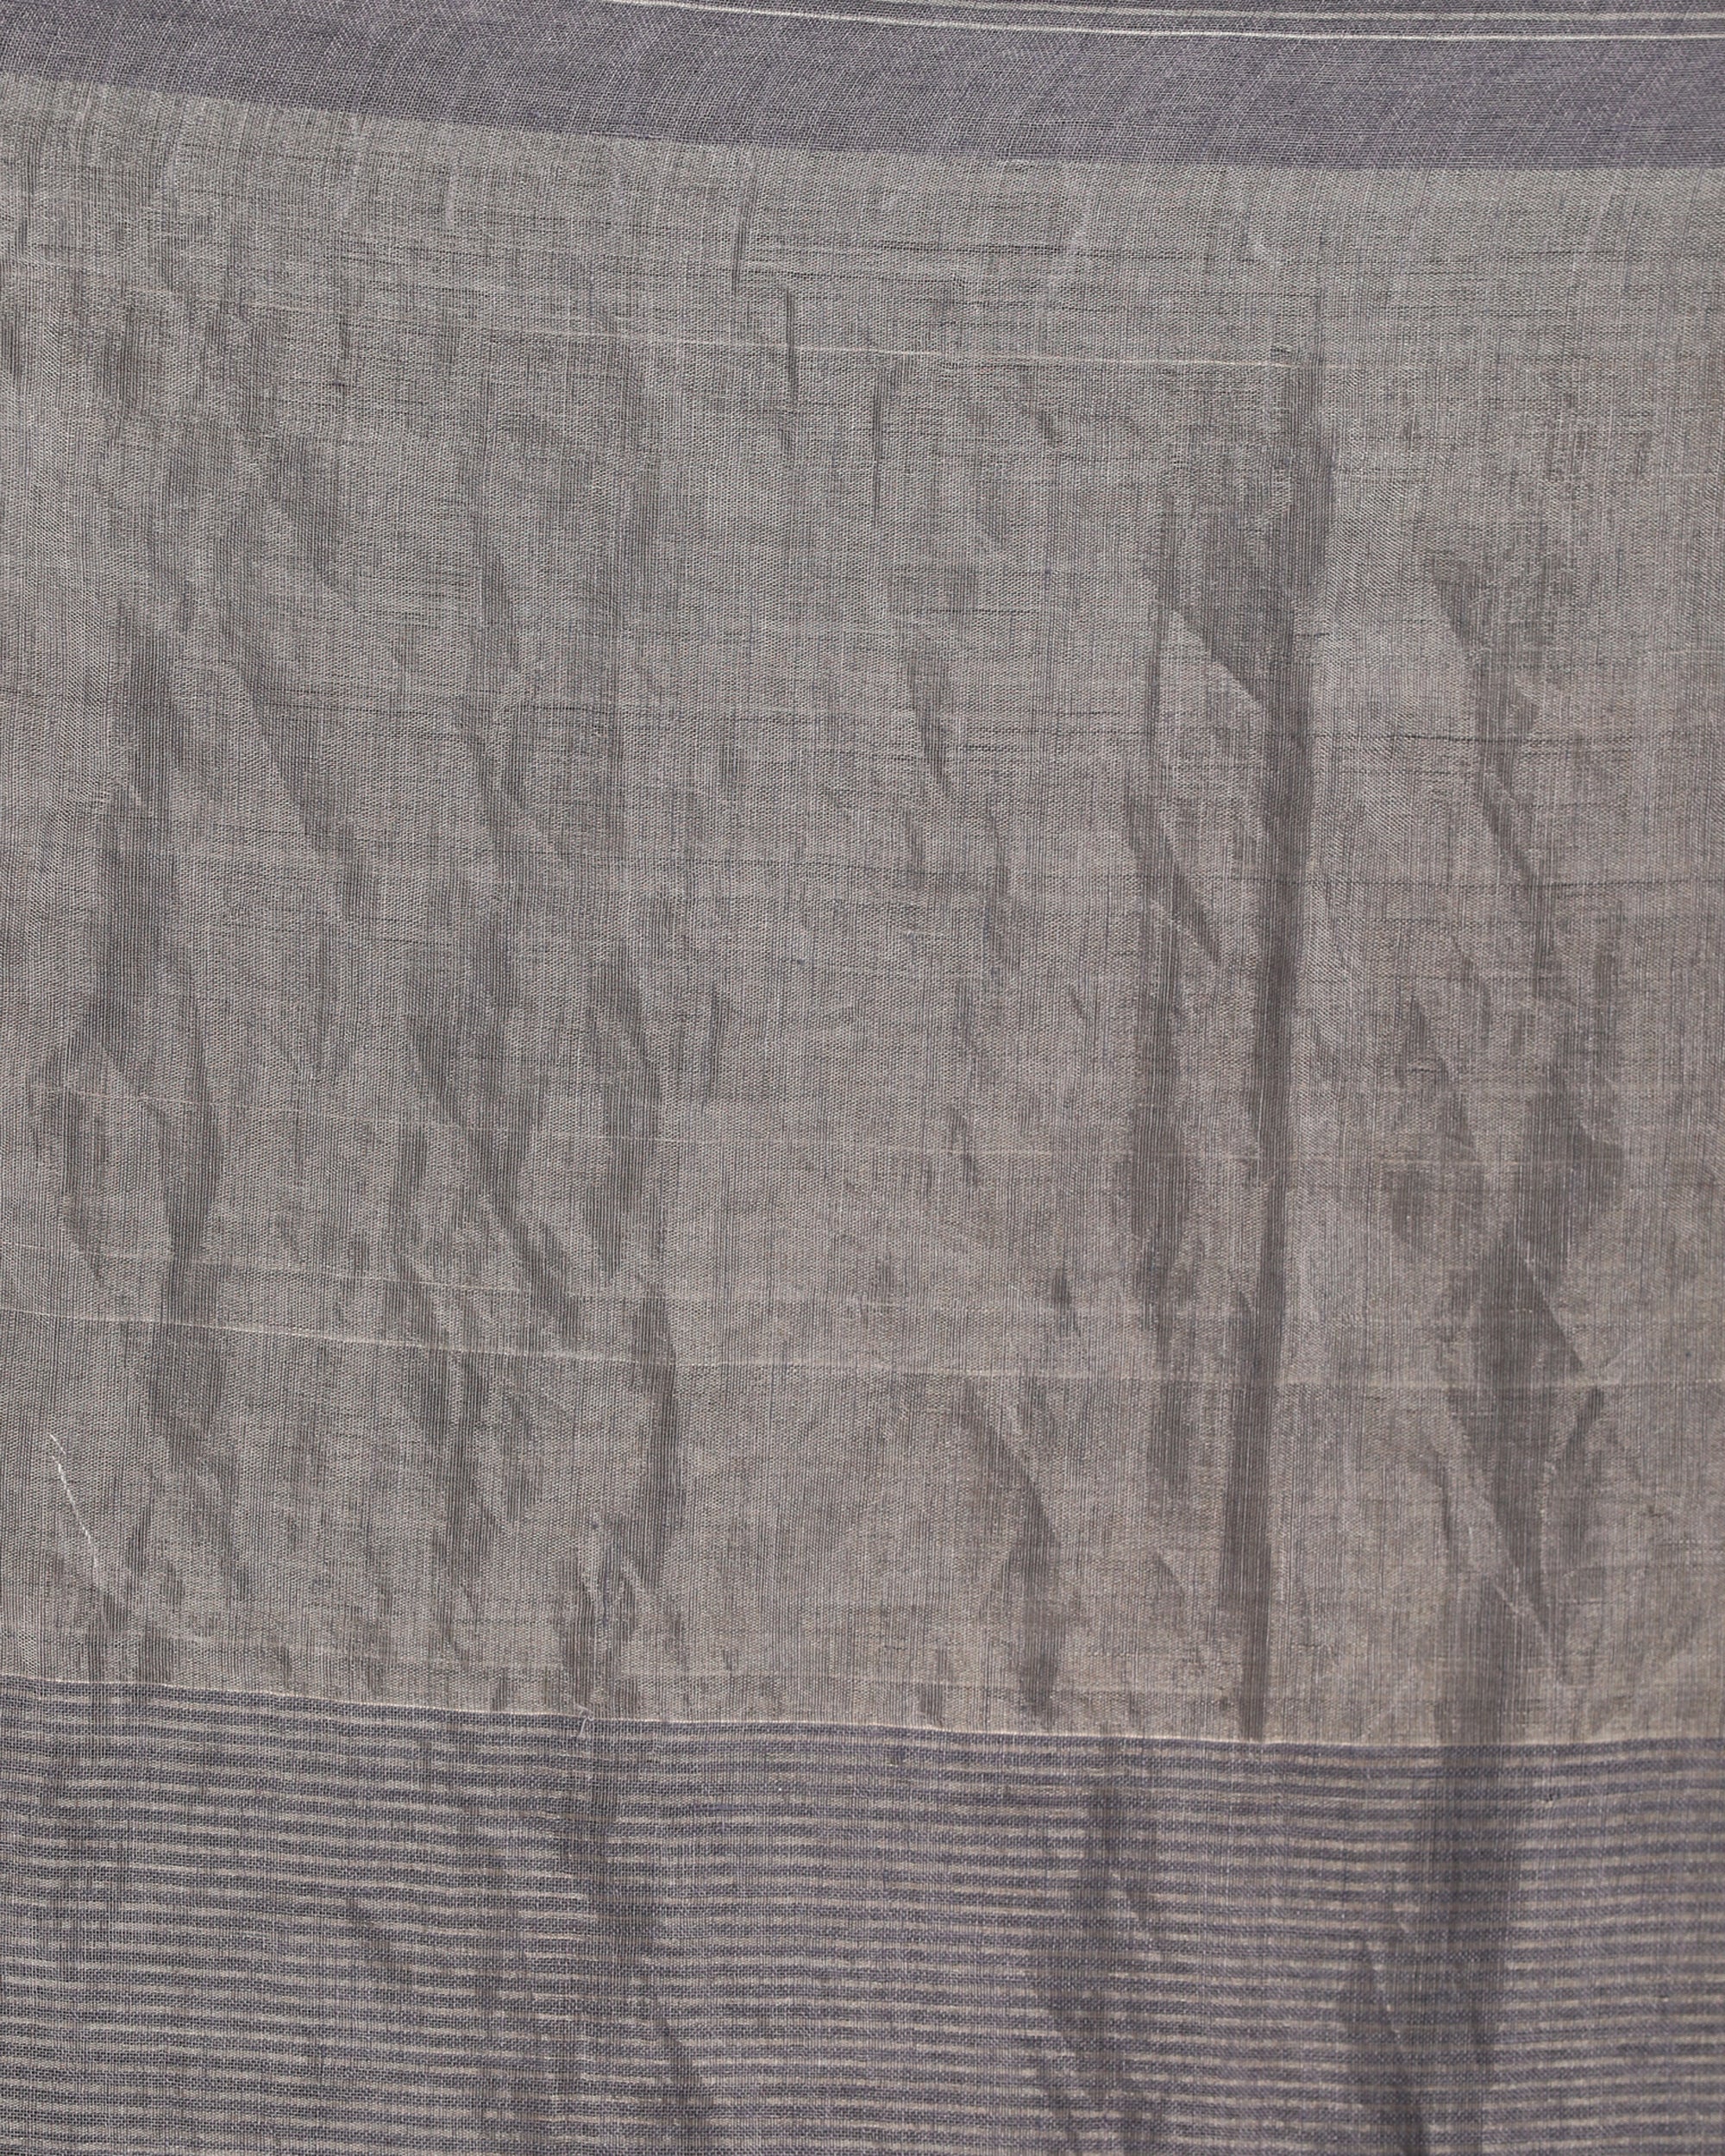 Women's Grey Blue Check Traditional Handloom Linen Saree - Angoshobha